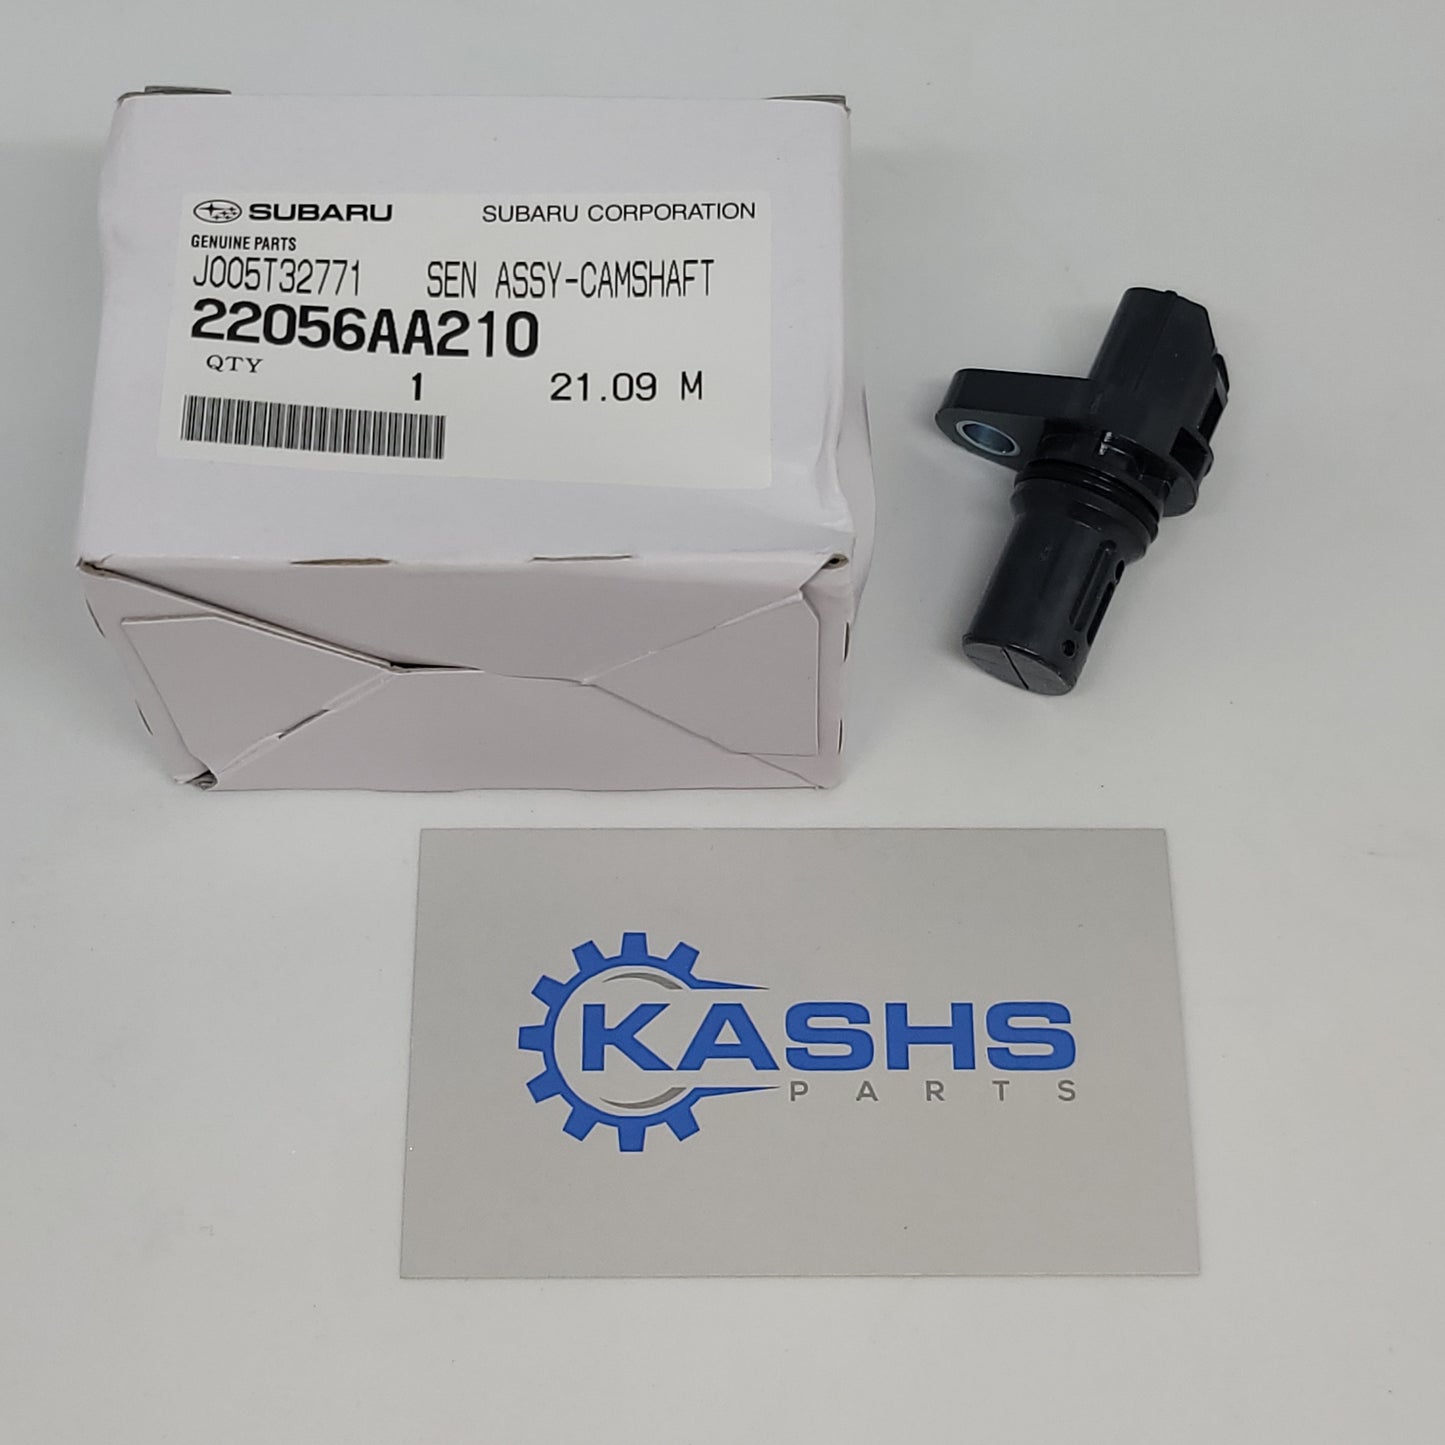 Genuine camshaft sensor 22056AA210